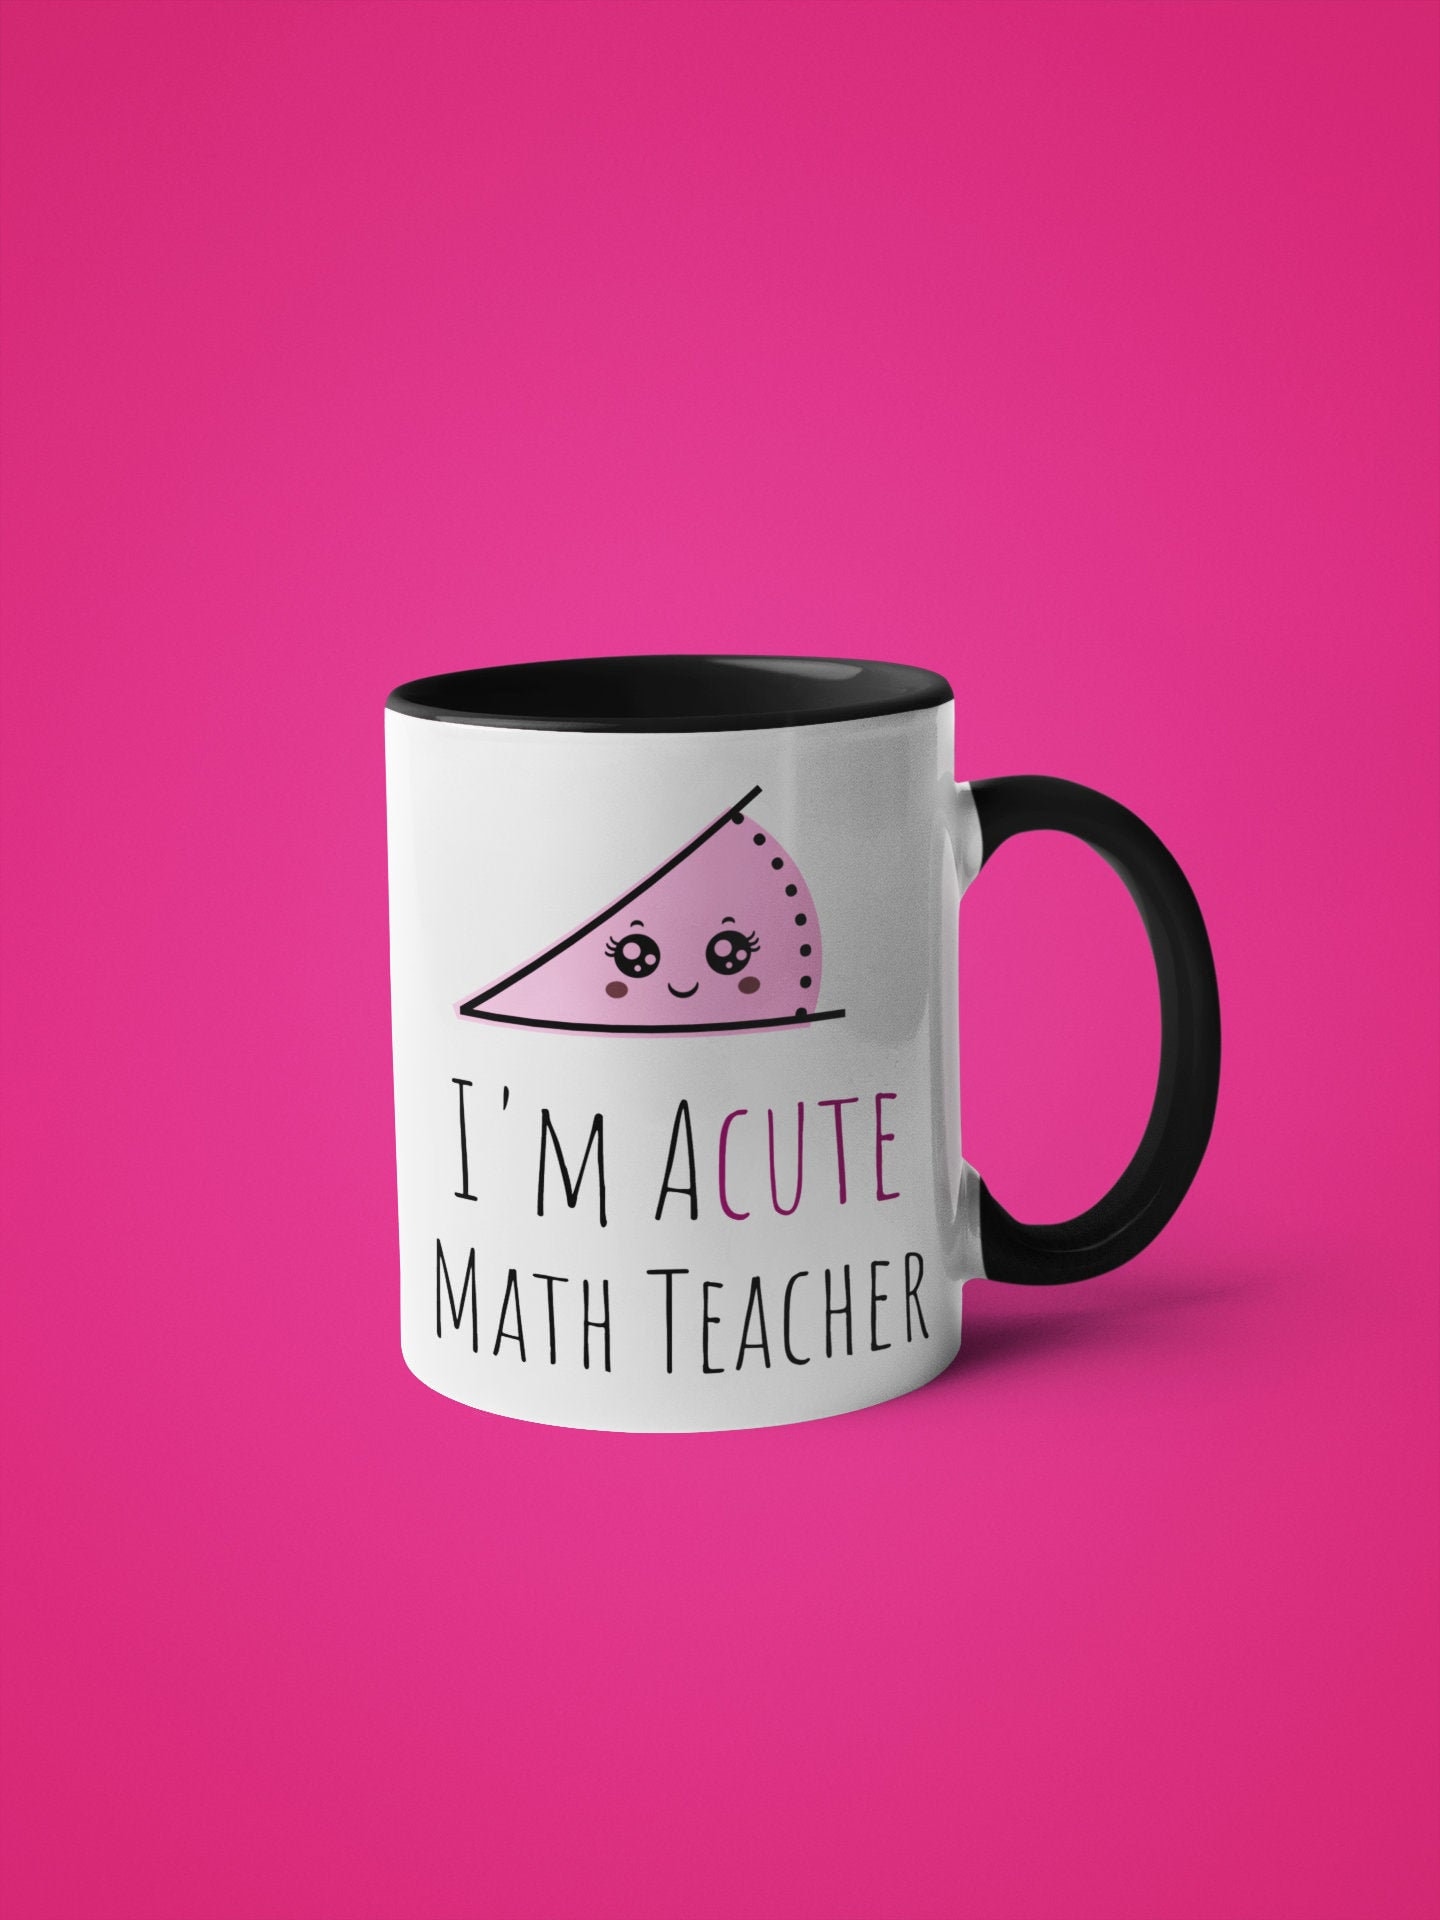 Math teachers they above average Ceramic 11oz Mug hh369 